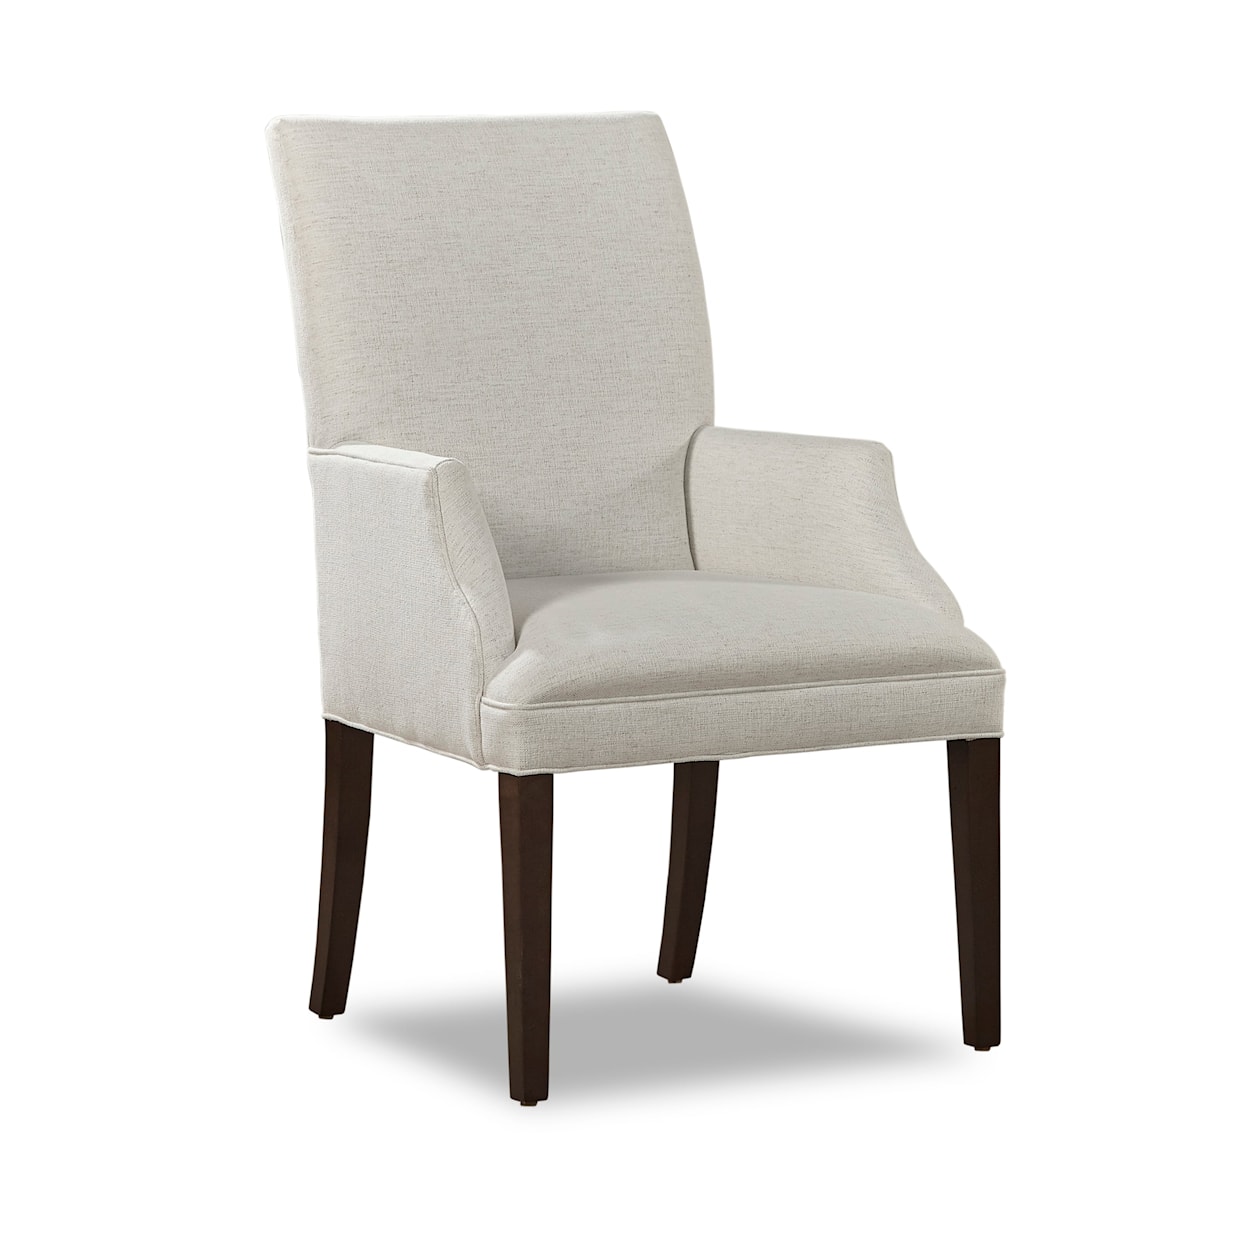 Huntington House 2421 Series Upholstered Host Chair